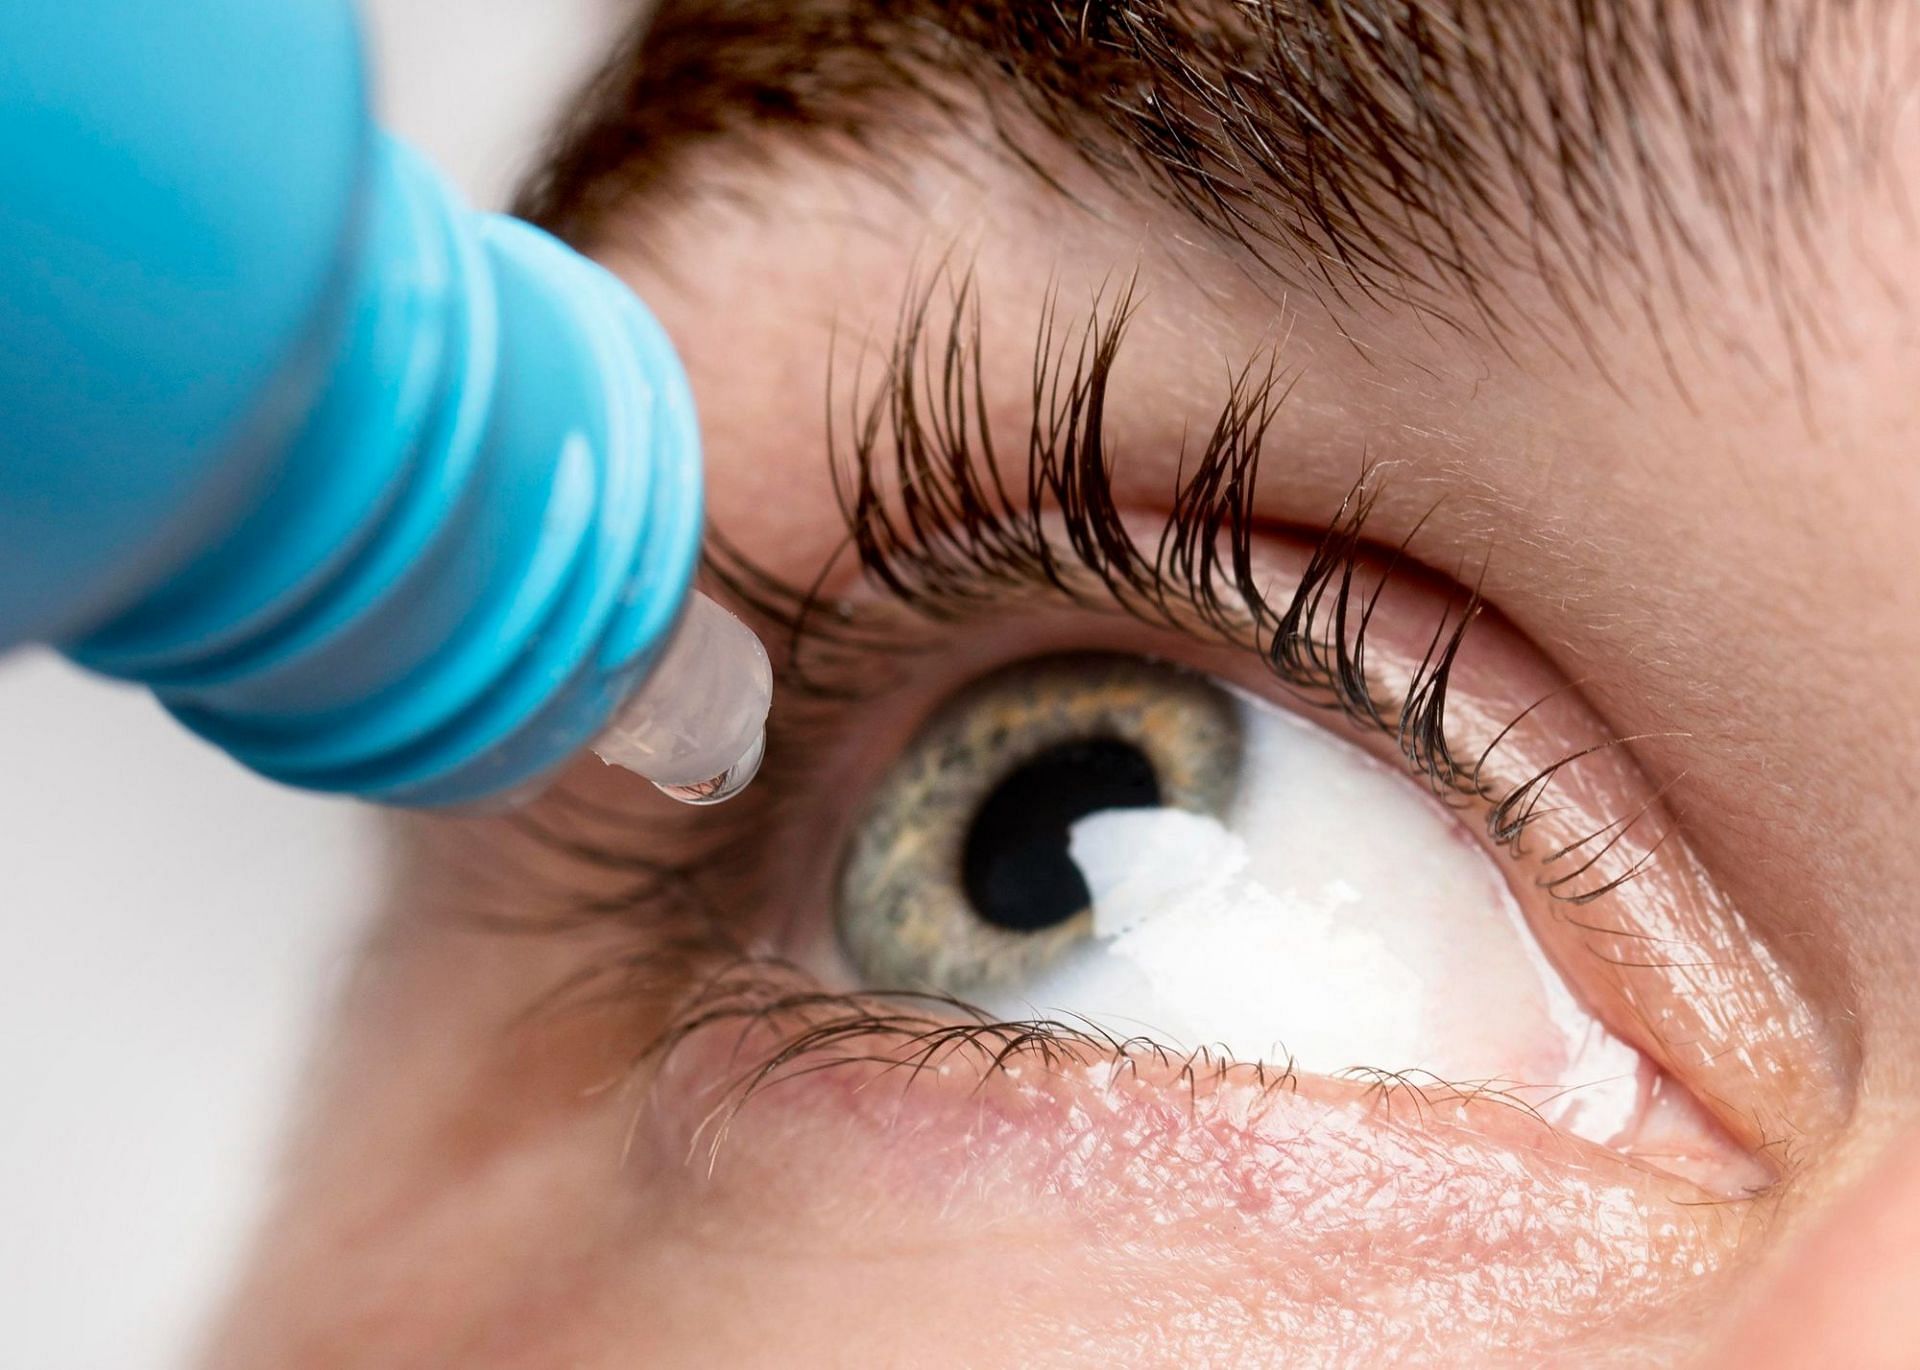 Prescription and over-the-counter eye drops can help. (Image via Freepik)